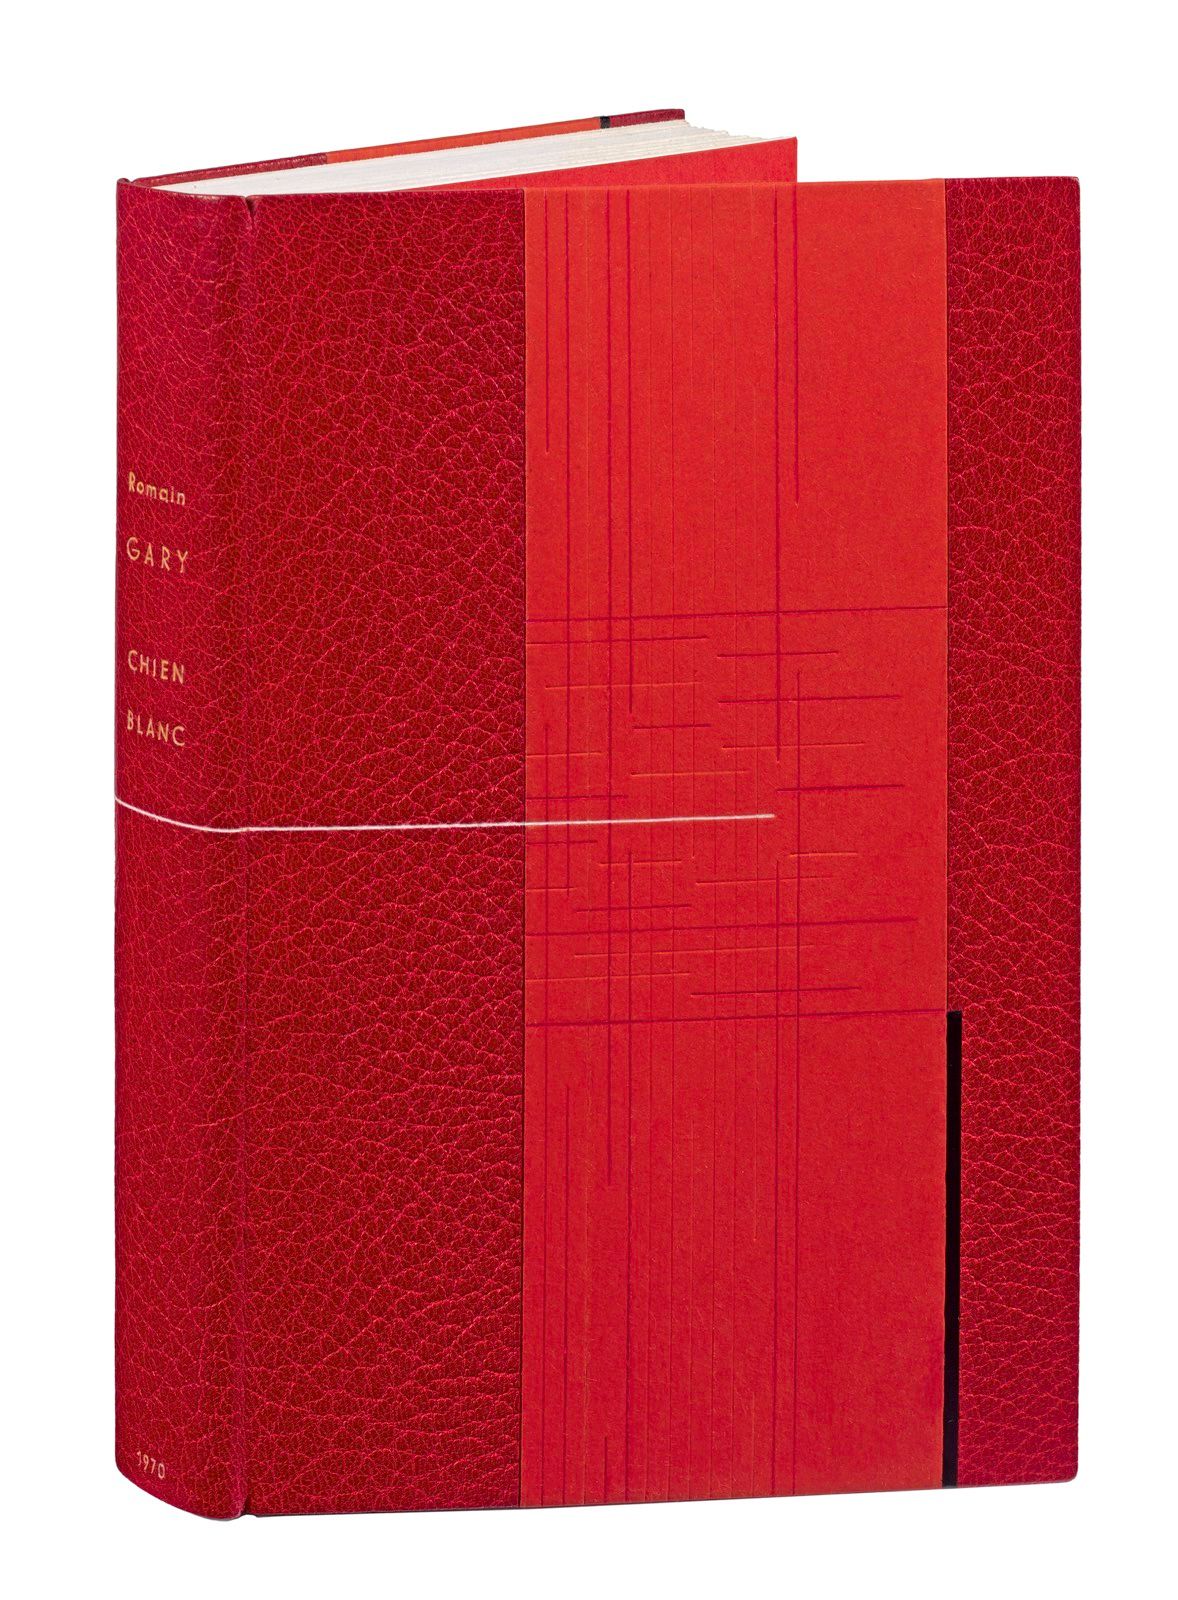 GARY (Romain). Chien blanc. Paris, Gallimard, 1970. In-8, demi-maroquin rouge à &hellip;